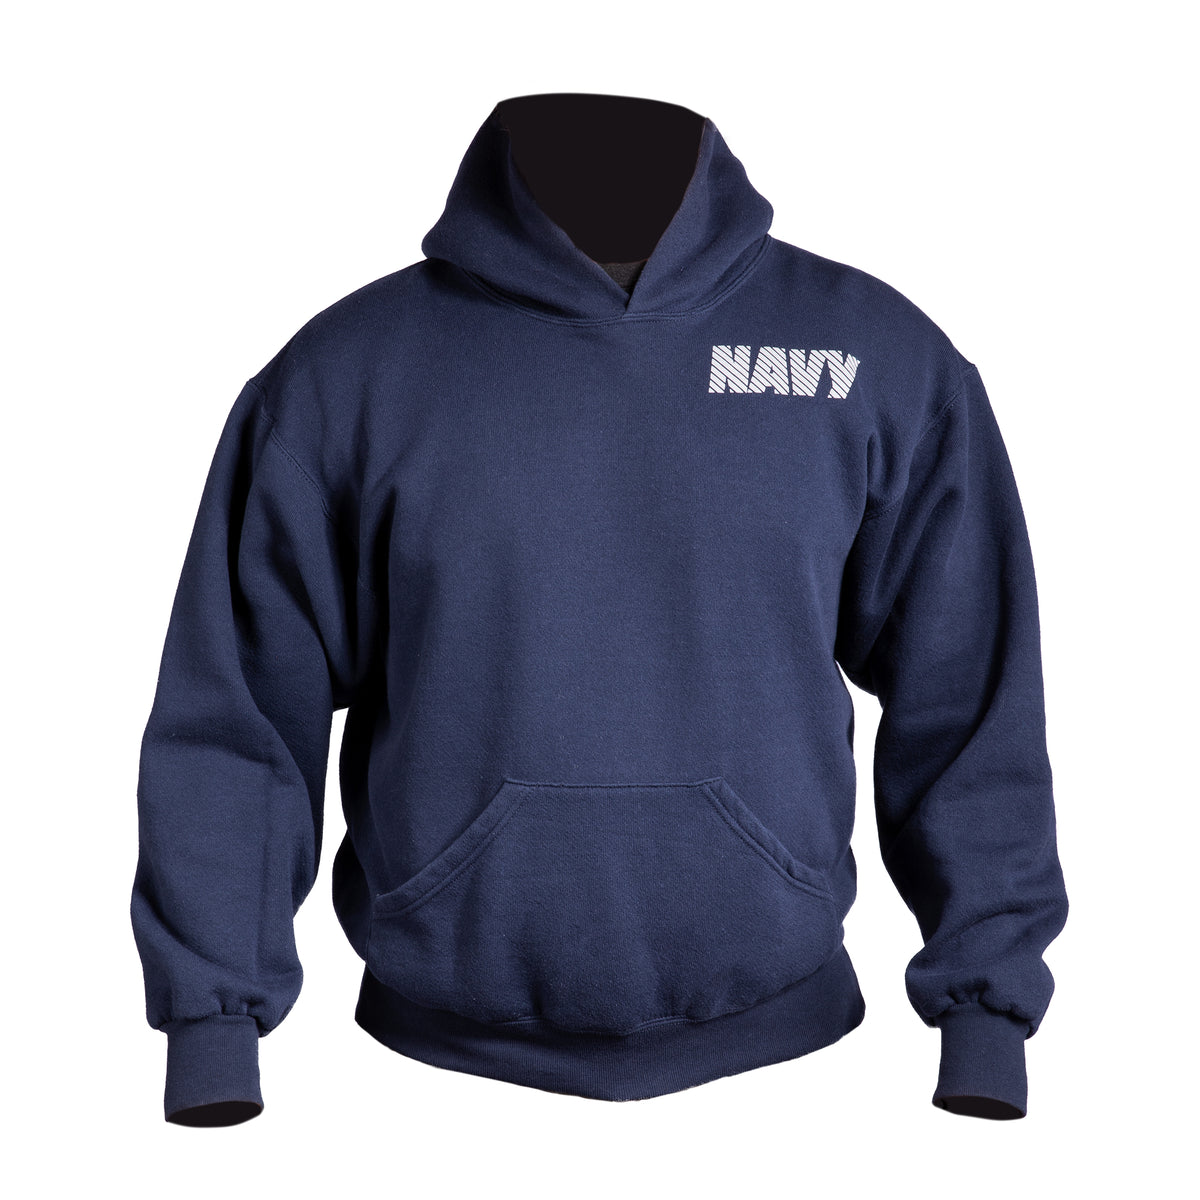 NAVY Sweatshirt, Hooded - Blue / Silver | Uniform Trading Company